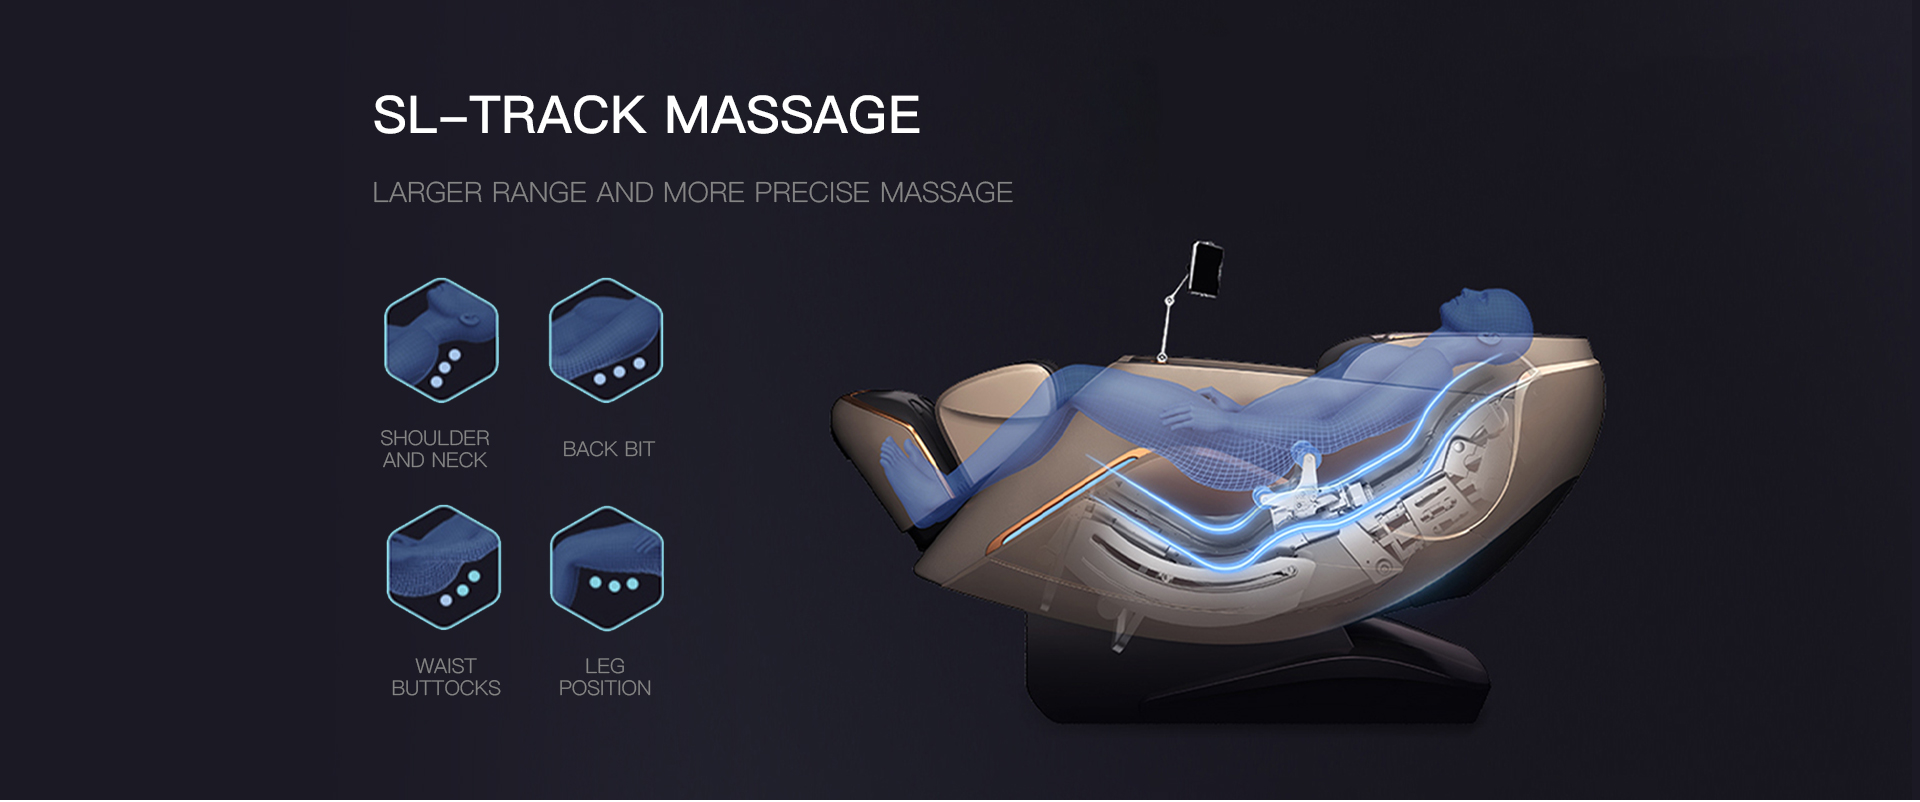 4d l track massage chair